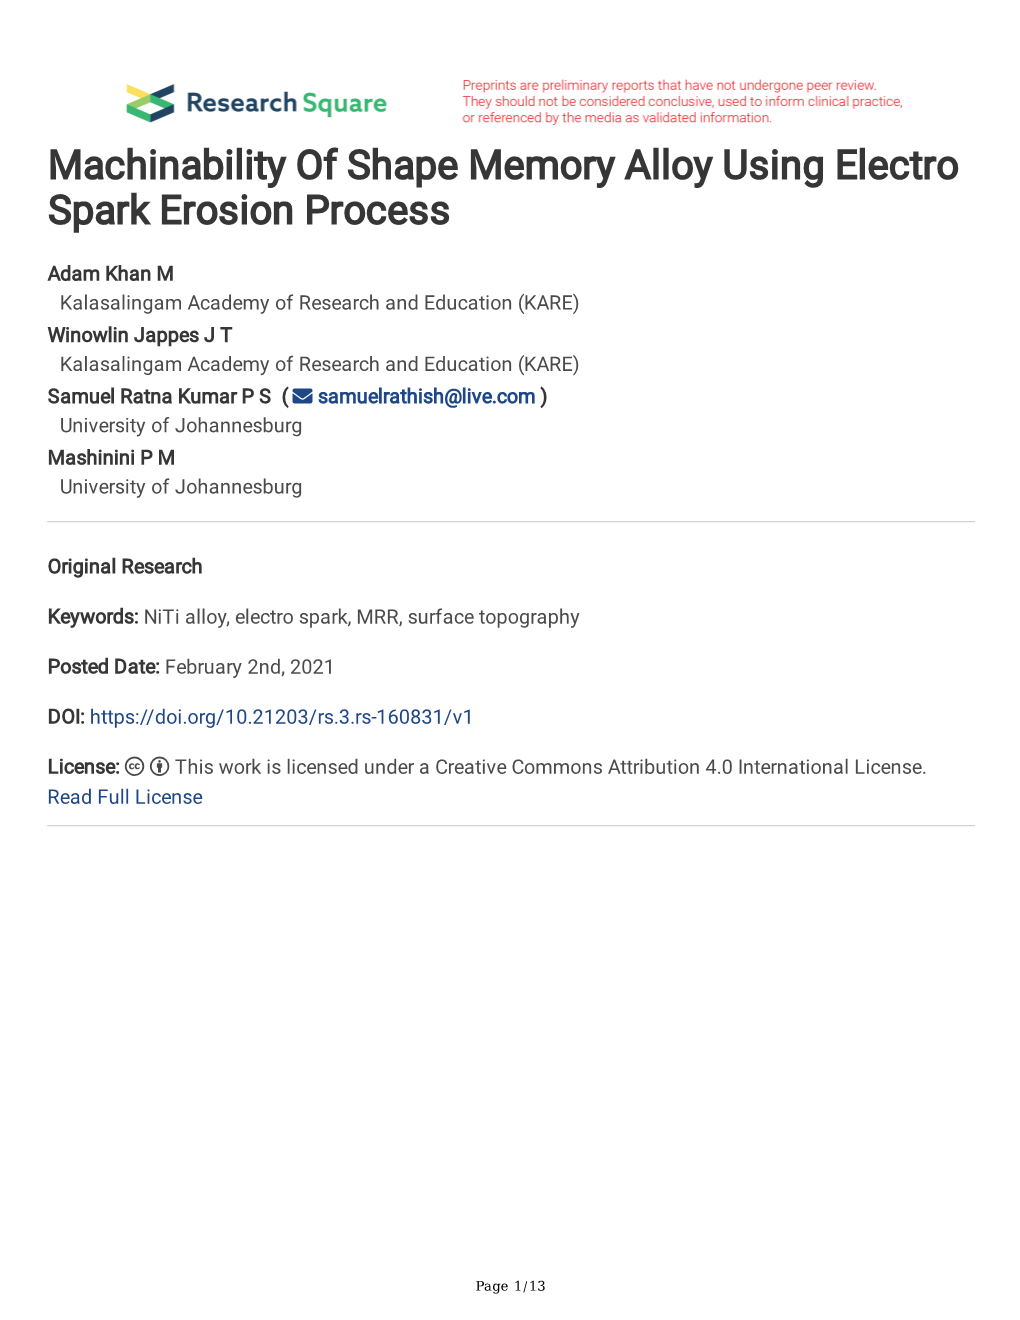 Machinability of Shape Memory Alloy Using Electro Spark Erosion Process